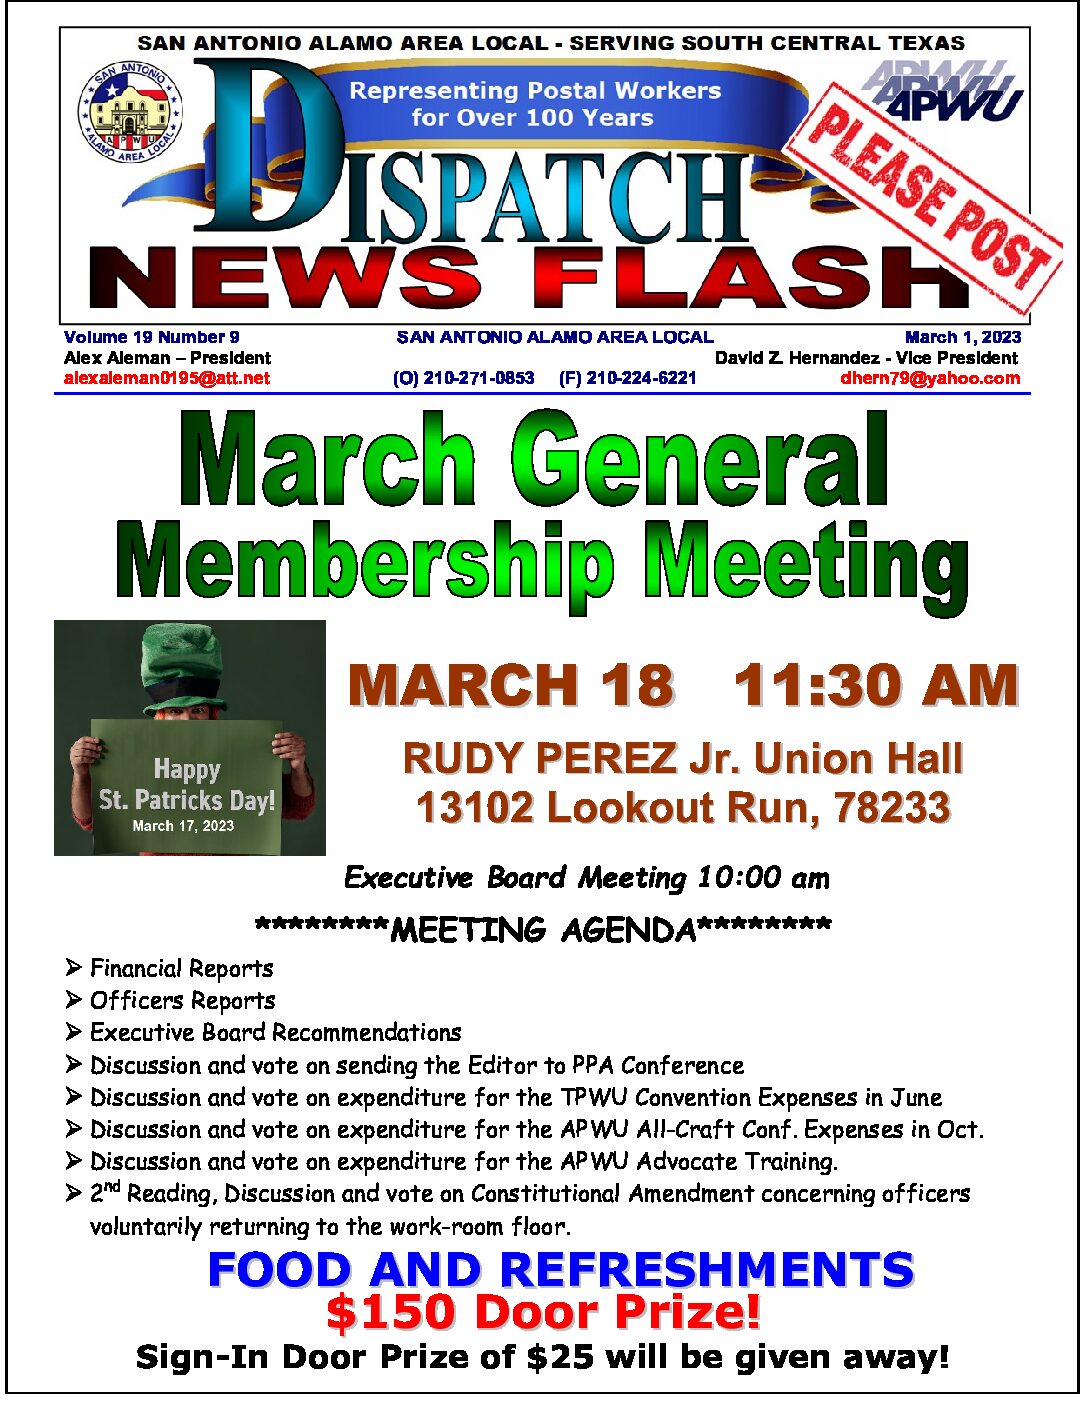 NewsFlash 19-9 March General Membership Meeting Notice - 